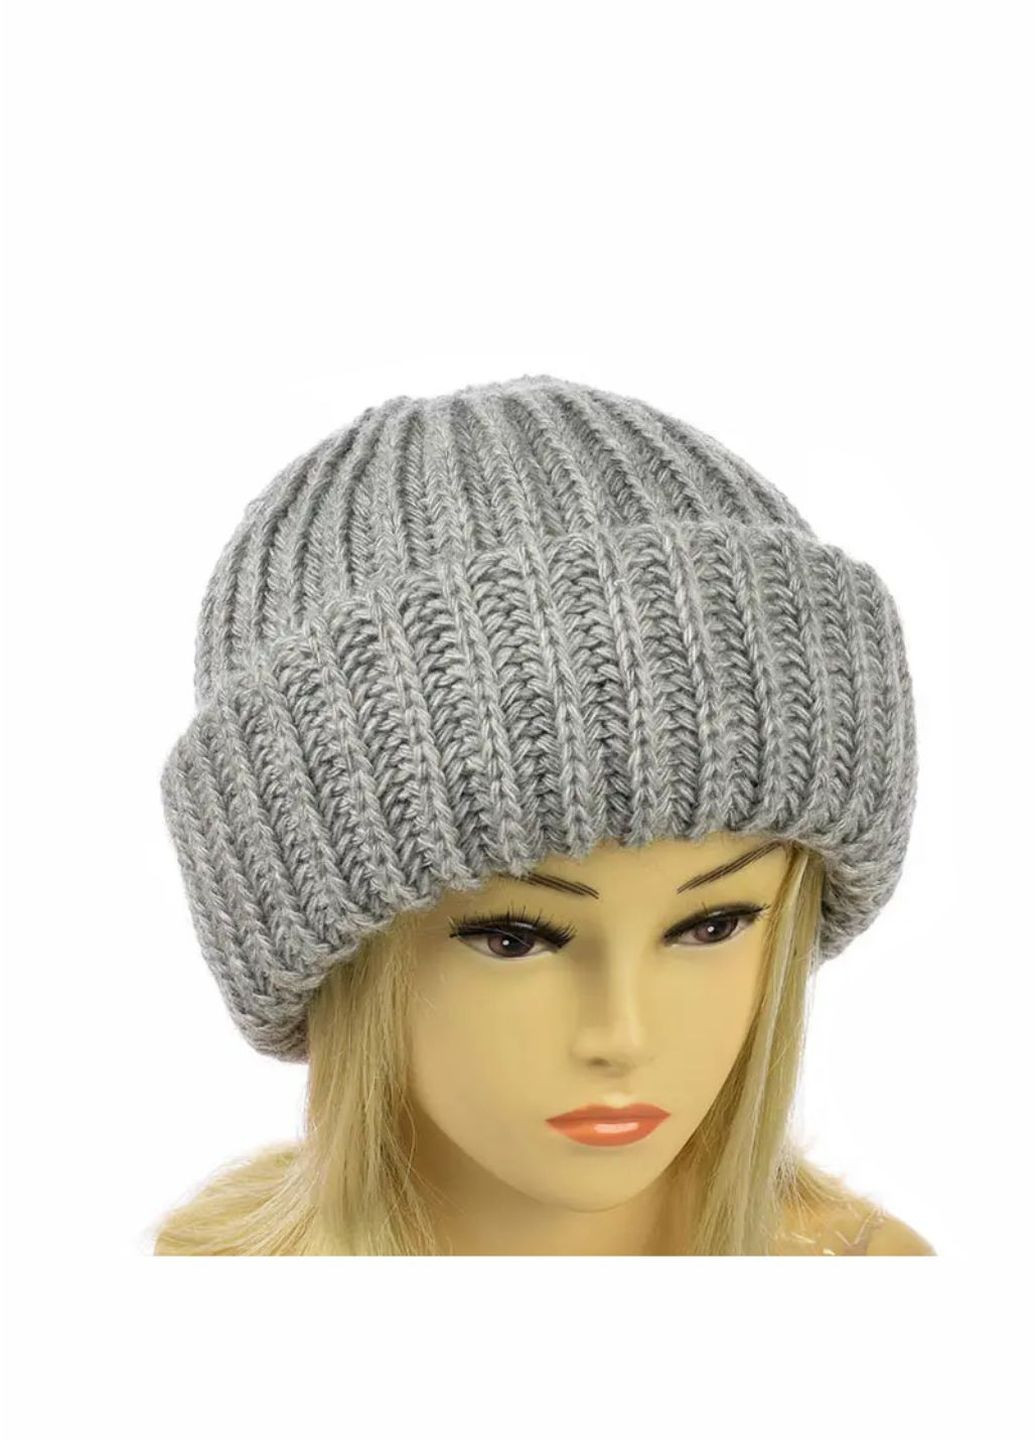 Жіночий зимовий комплект Барбара шапка + хомут No Brand набор барбара (276260552)